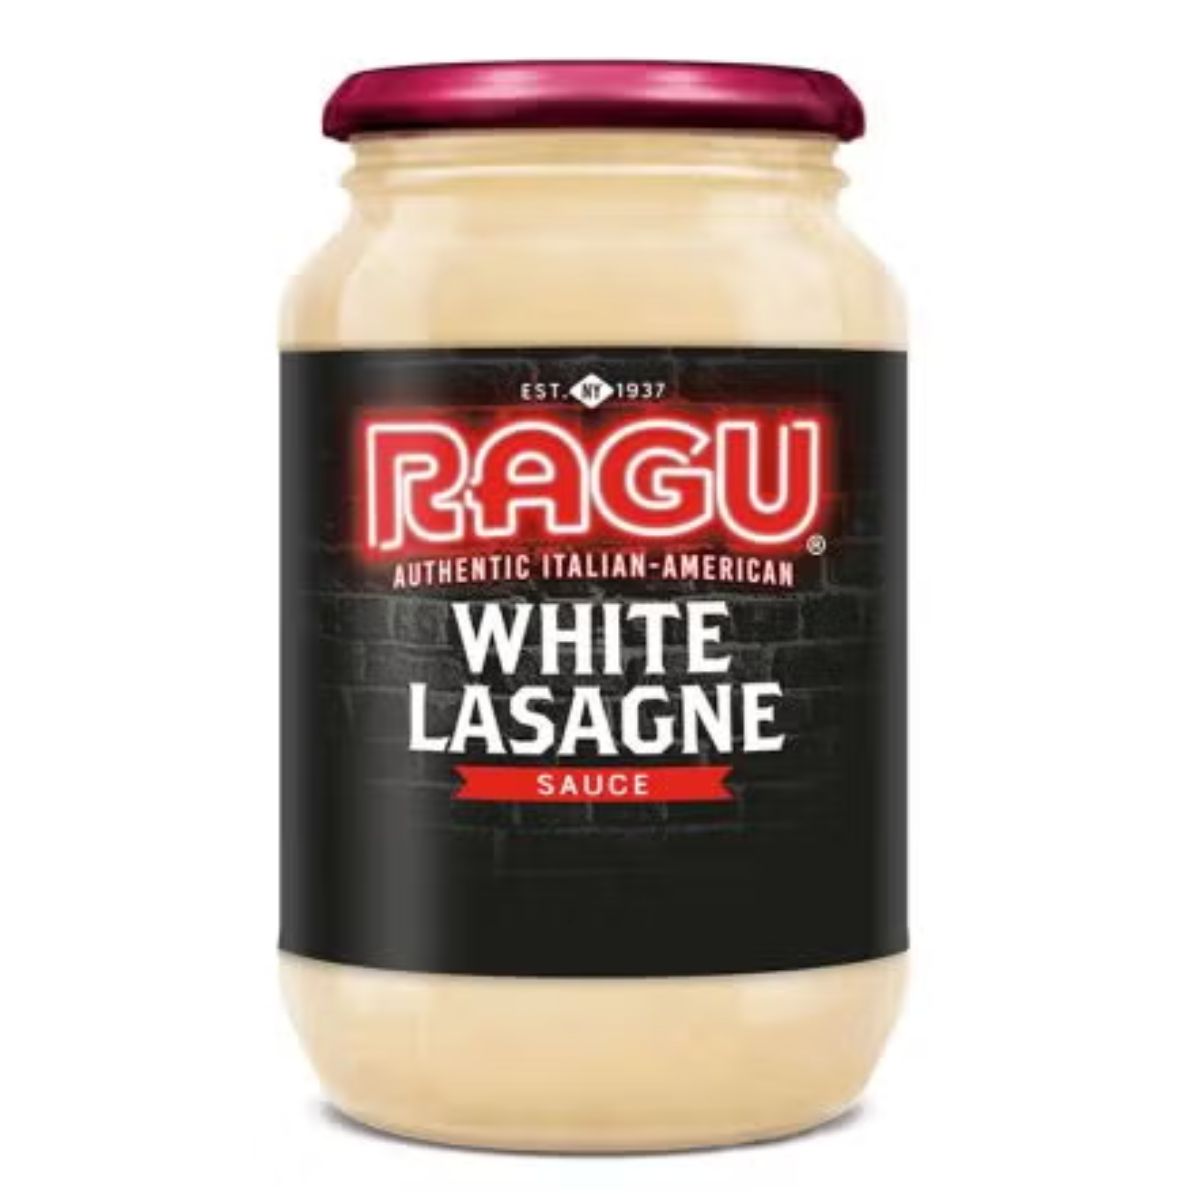 Ragu - White Lasagne Sauce - 500g white lasagne sauce.